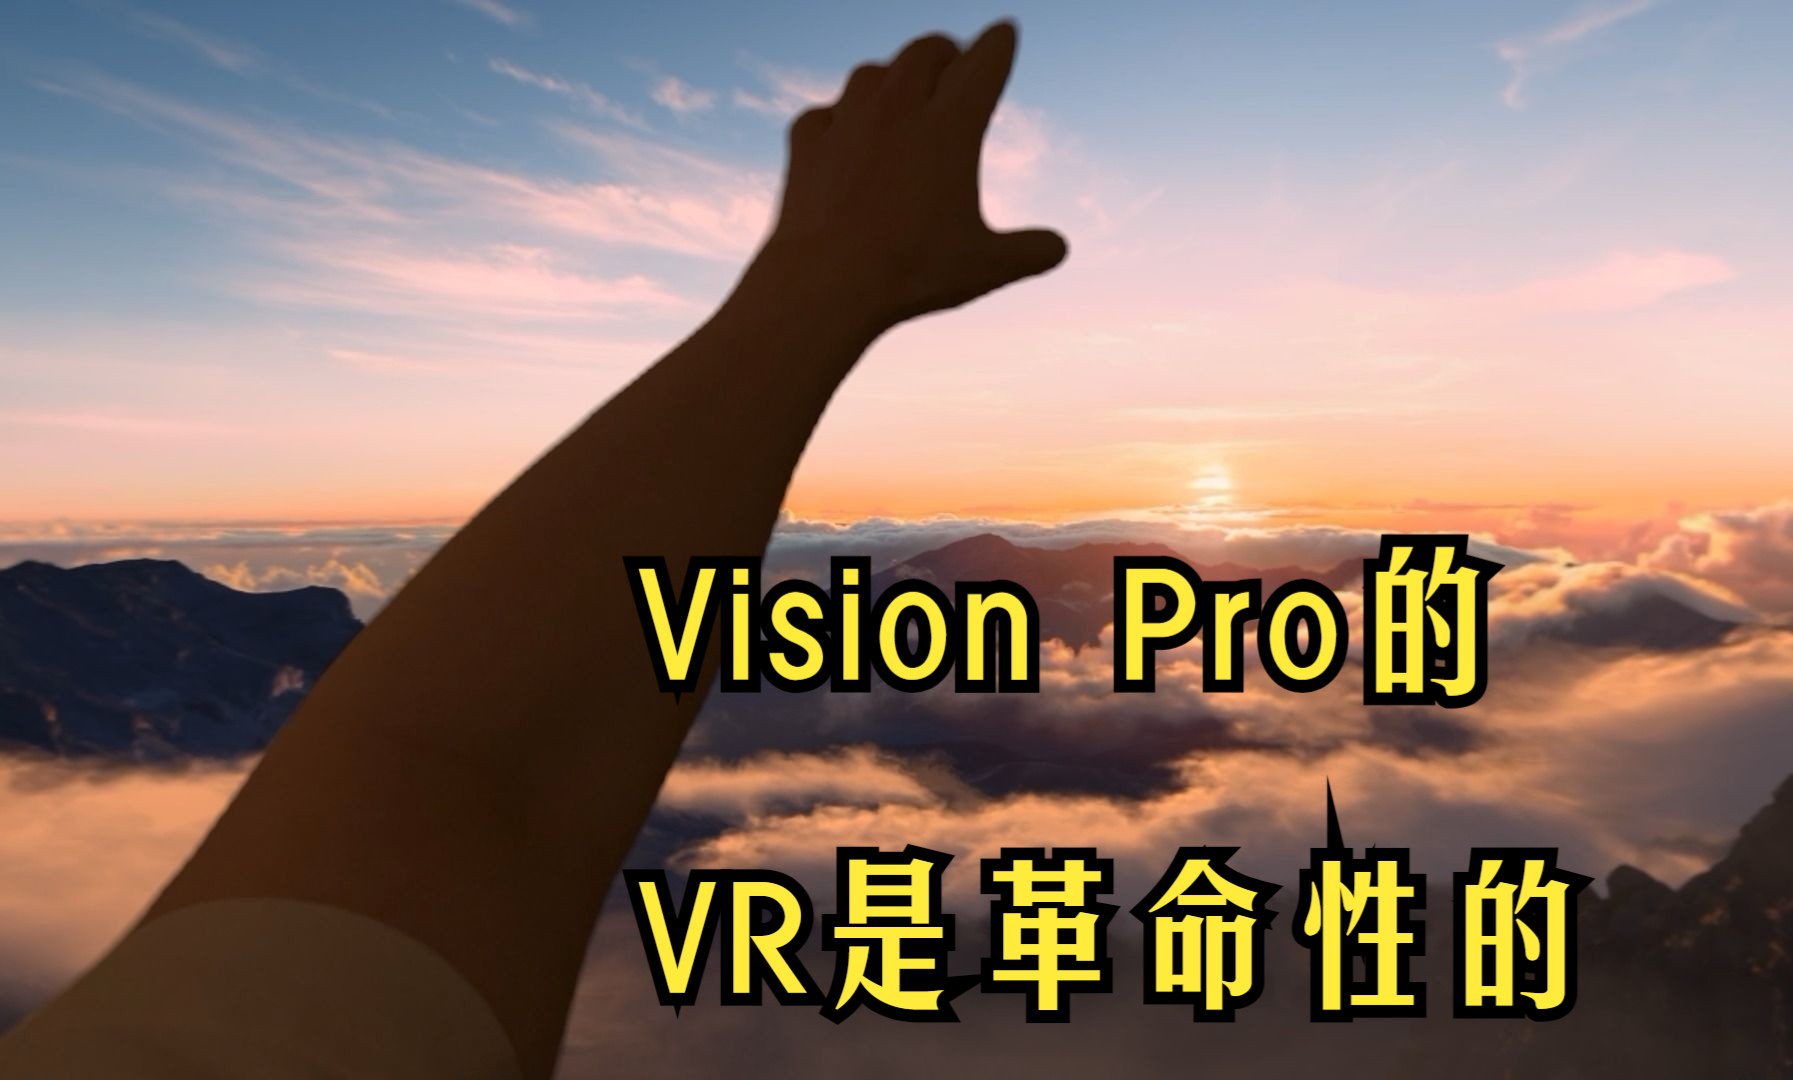 Vision Pro的VR能听到山间回音，看到自己的手臂，完全沉浸其中